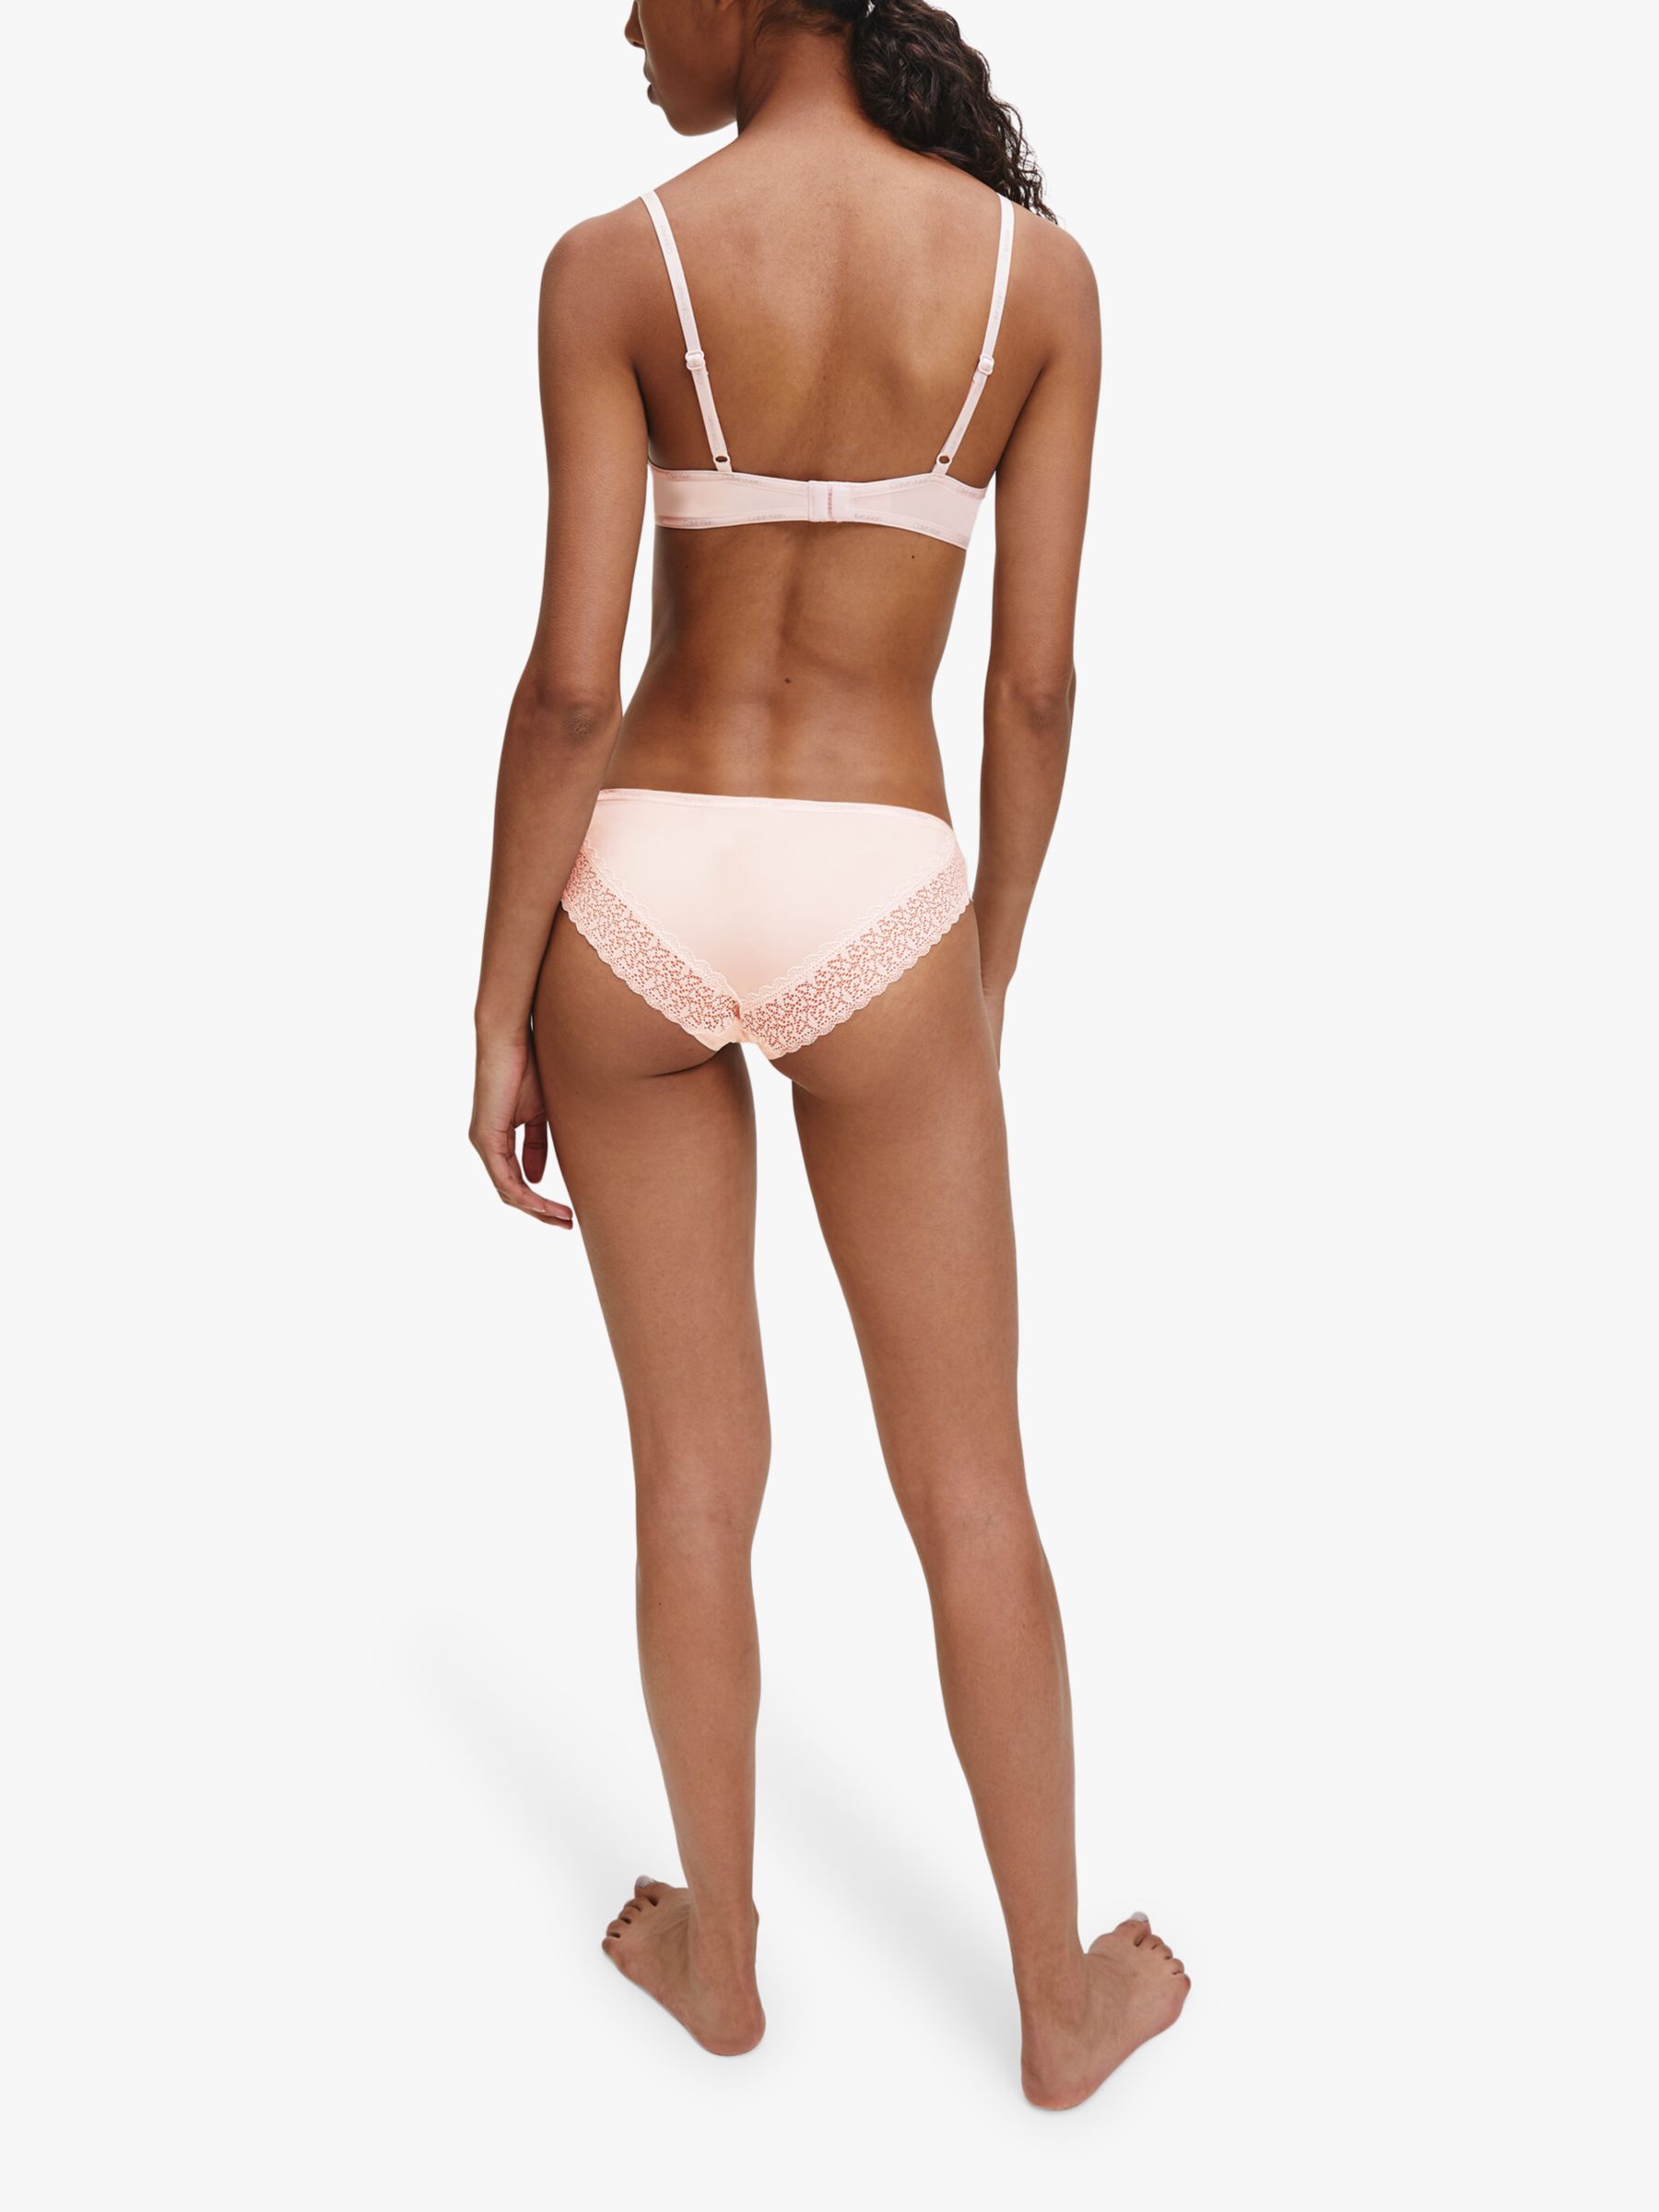 Calvin Klein Modern Cotton Bikini Knickers, Nymphs Thigh at John Lewis &  Partners